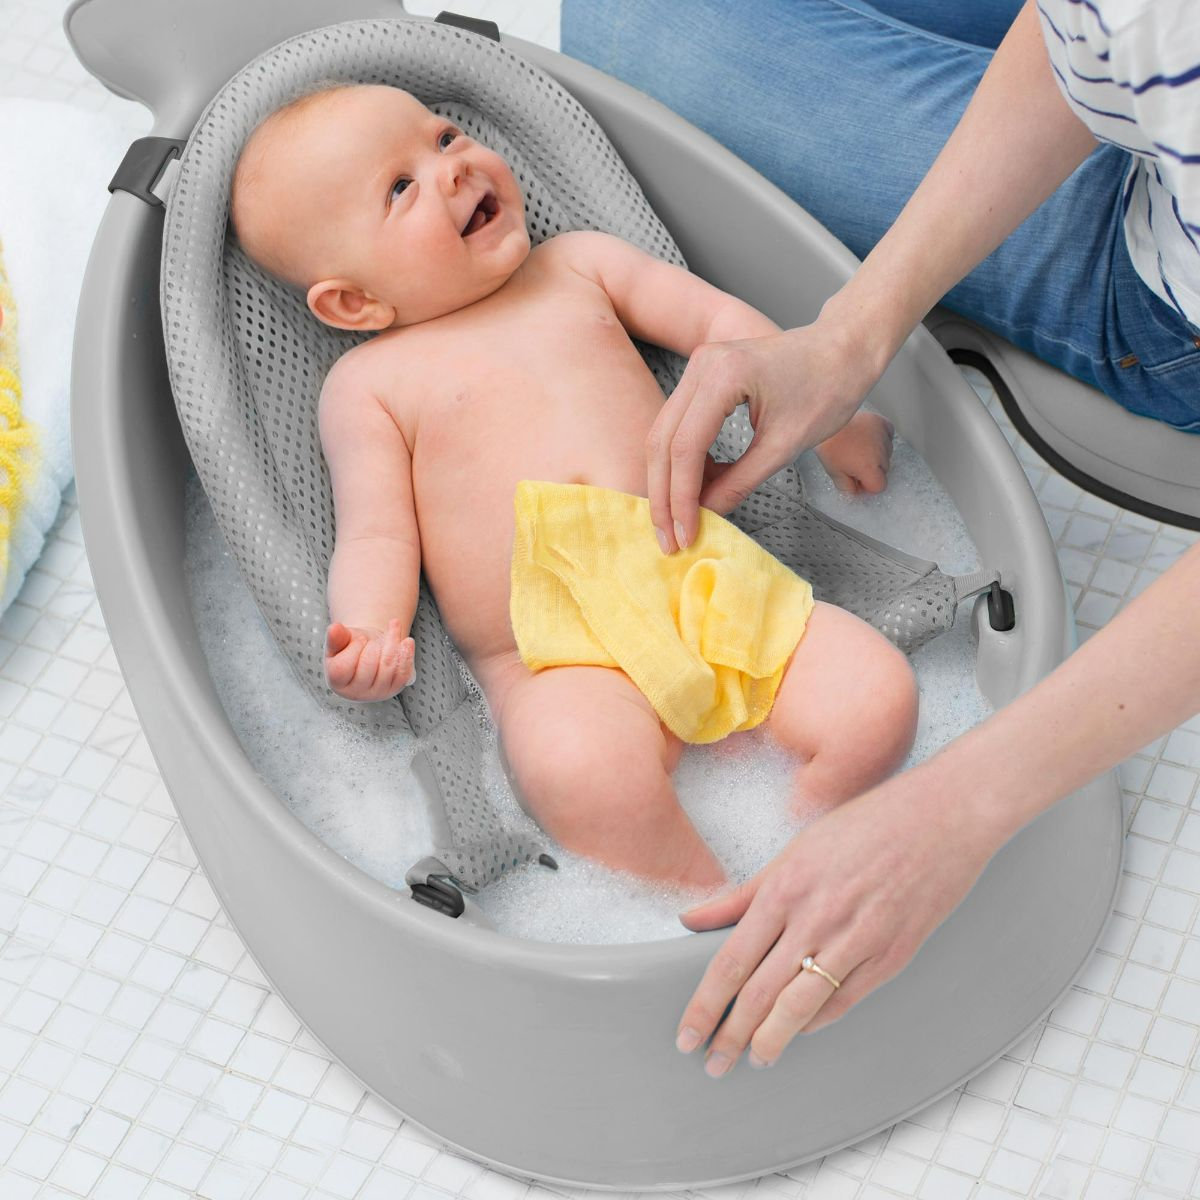 Cute Baby Bath Tub Ring Seat Infant Child Toddler Kids Anti Slip Safety Chair BG 